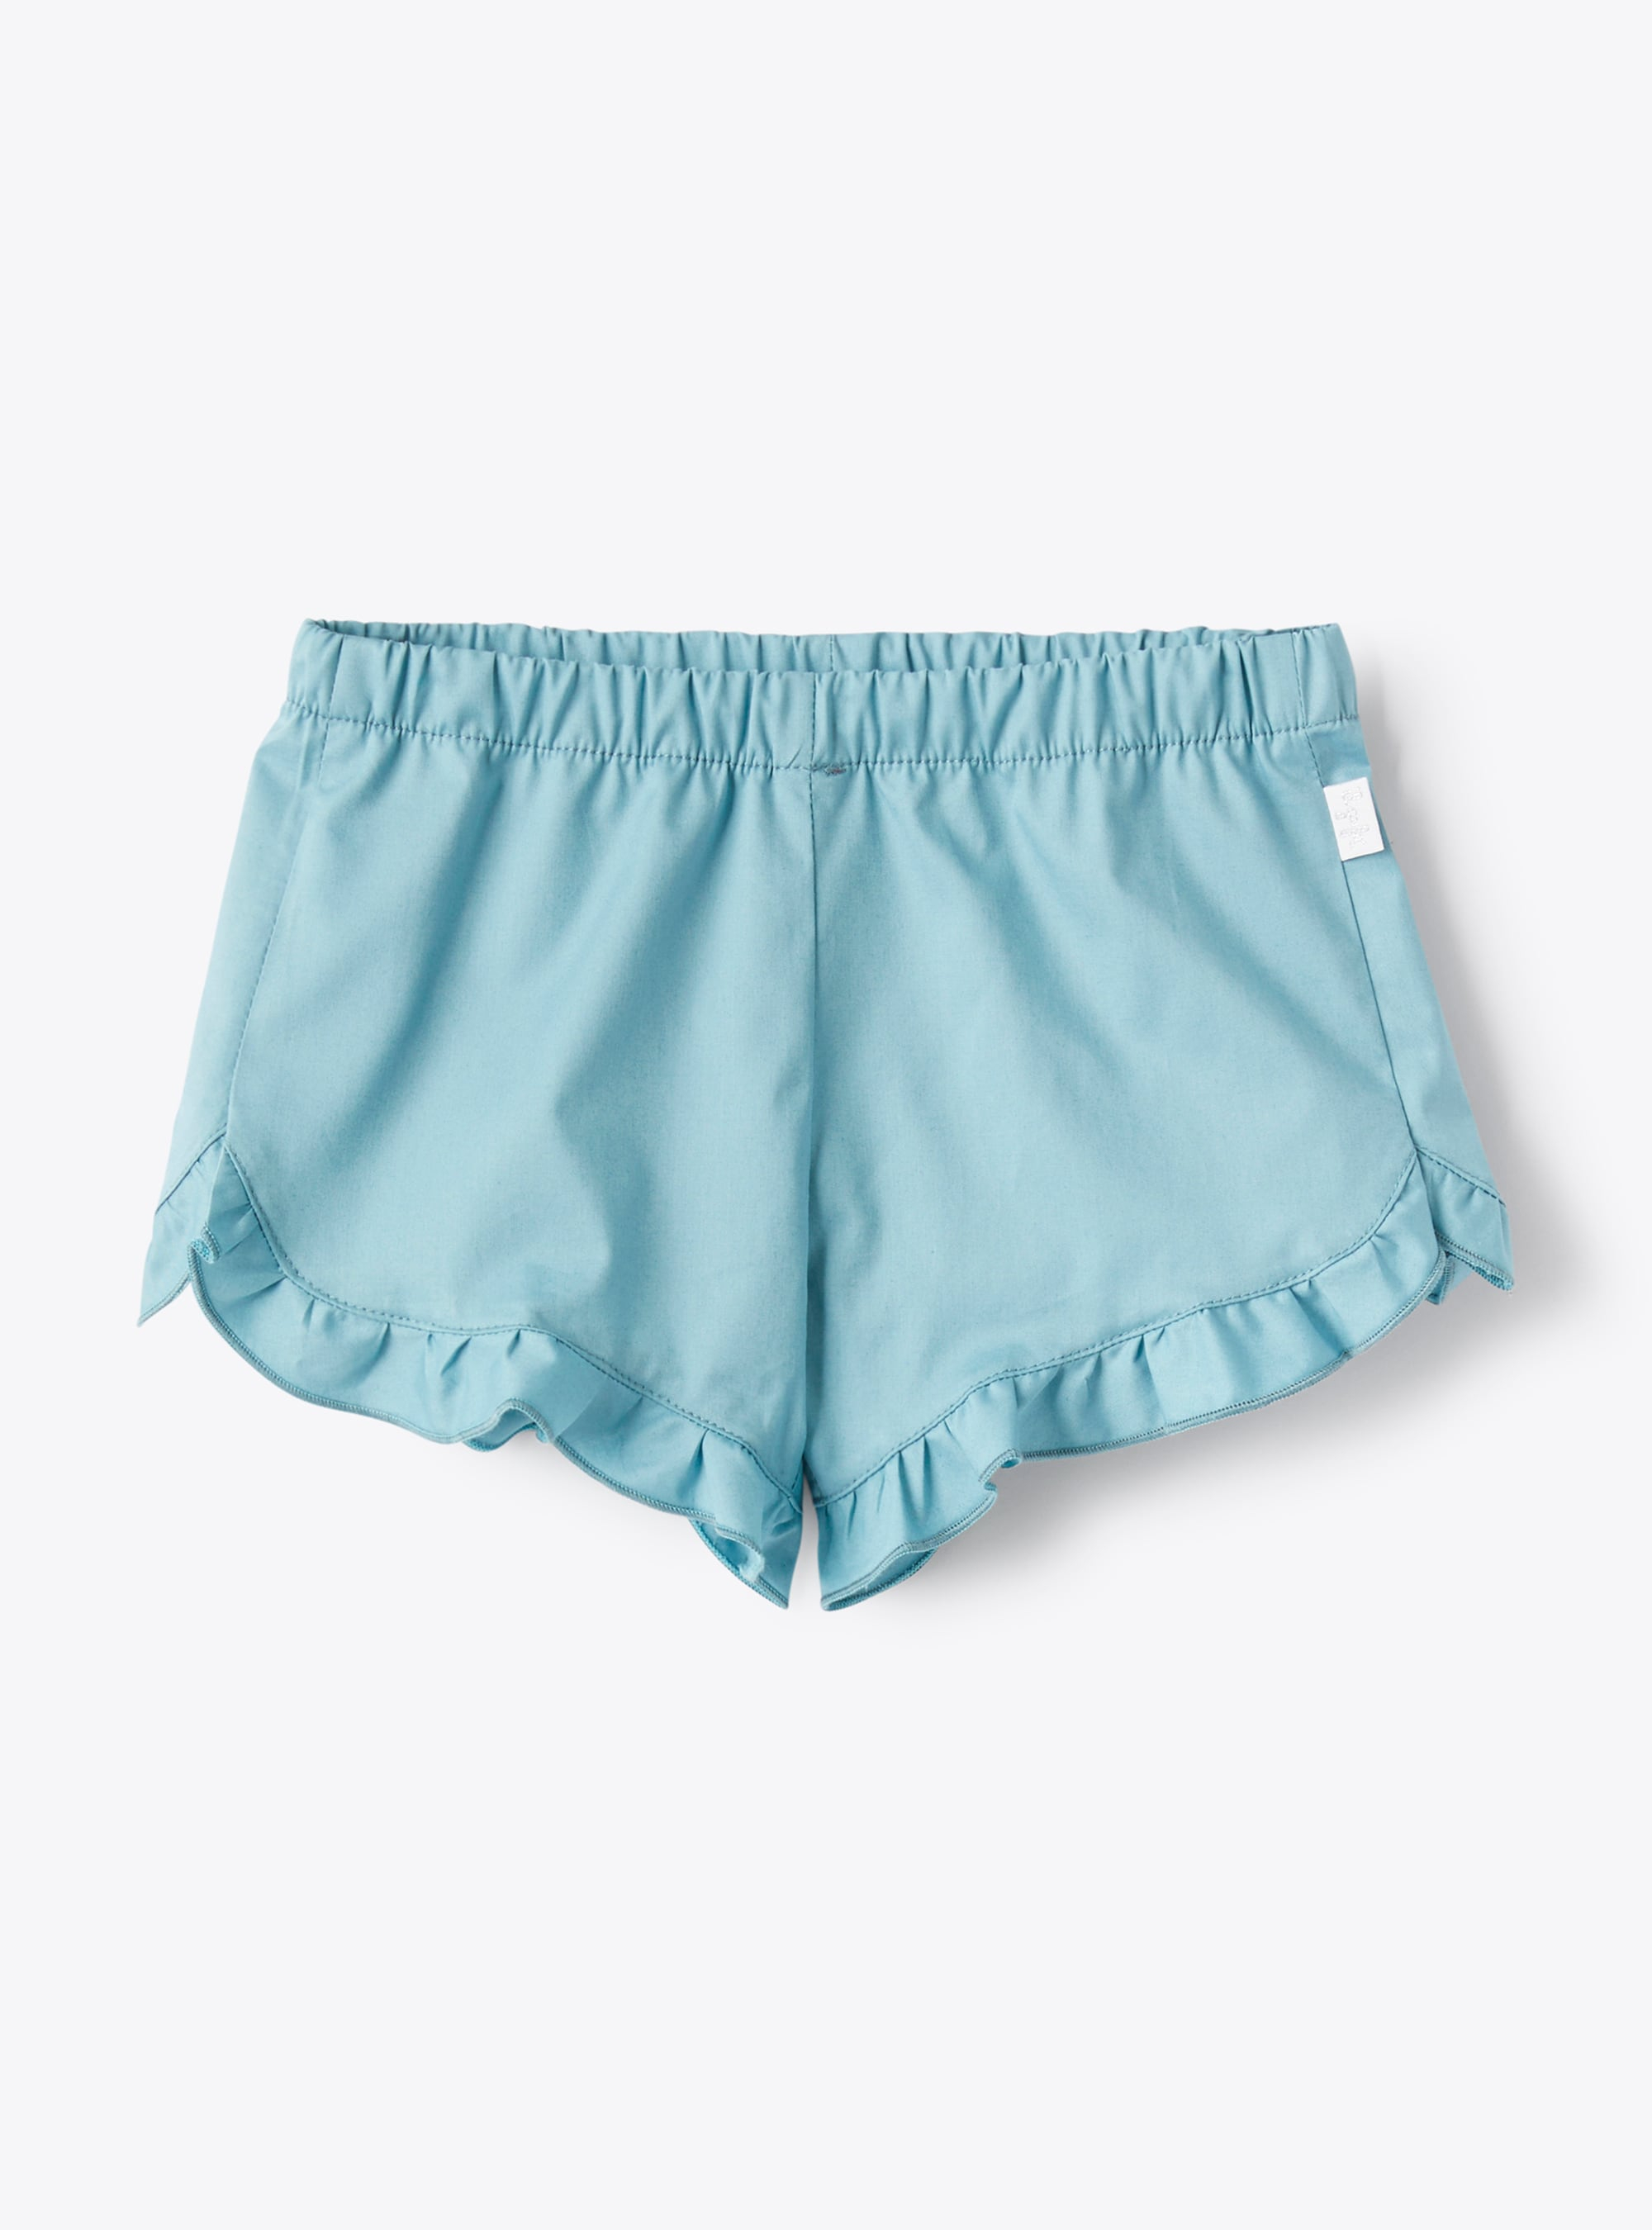 Shorts in stretch sea-green poplin - Trousers - Il Gufo